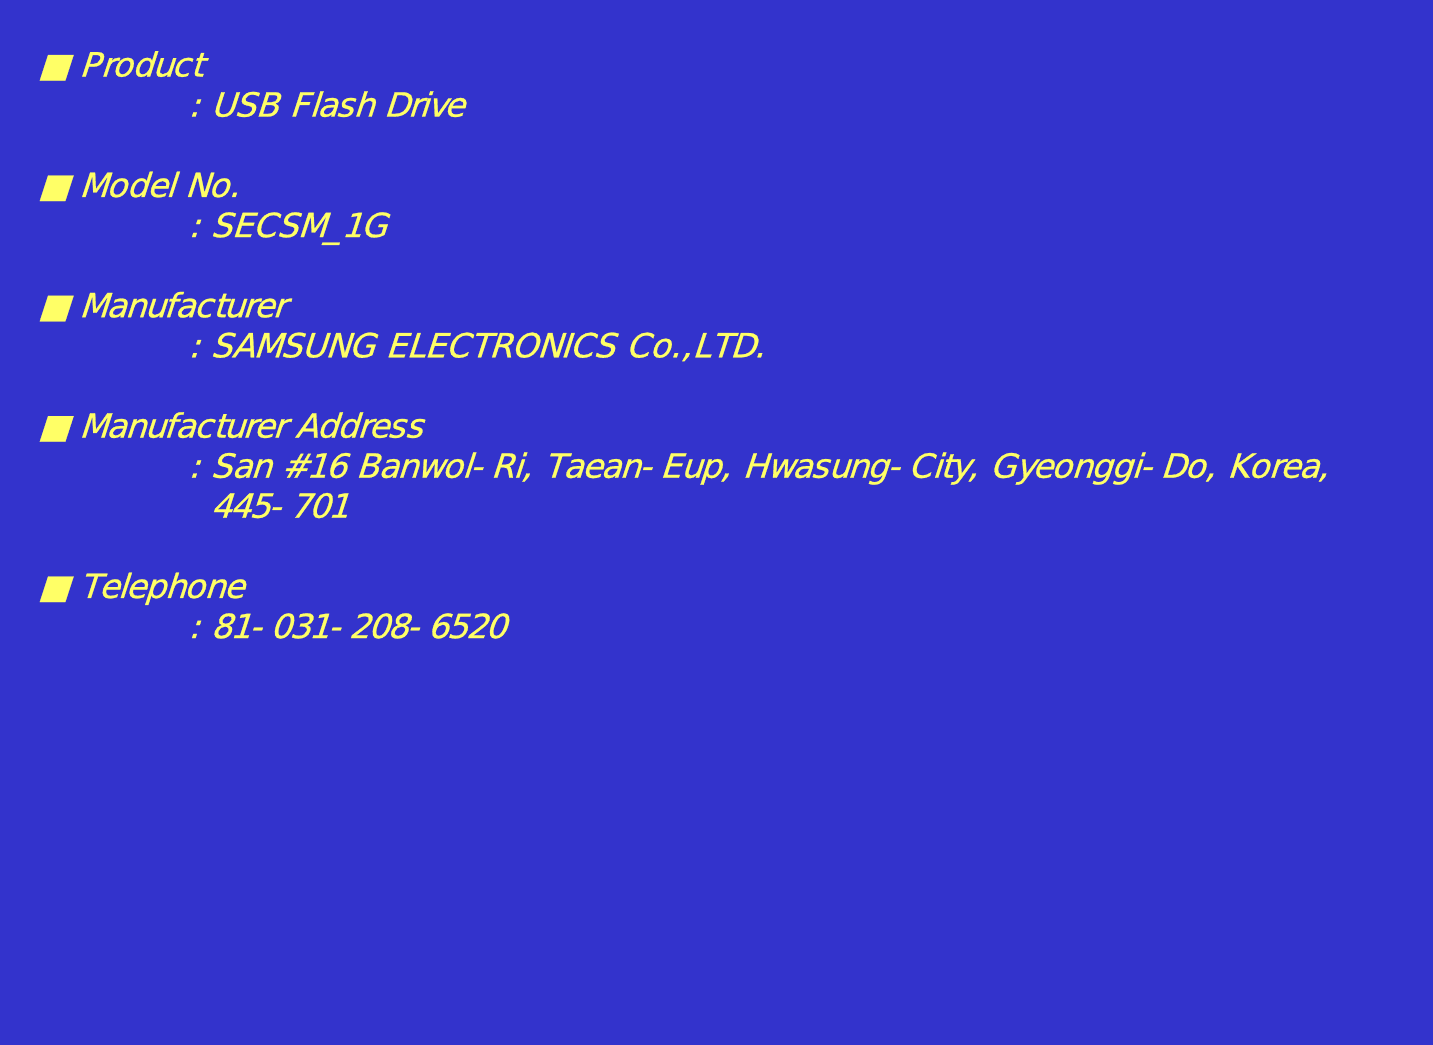 ■Product: USB Flash Drive■ Model No.: SECSM_1G■ Manufacturer: SAMSUNG ELECTRONICS Co.,LTD.■ Manufacturer Address: San #16 Banwol-Ri, Taean-Eup, Hwasung-City, Gyeonggi-Do, Korea,445-701■ Telephone: 81-031-208-6520